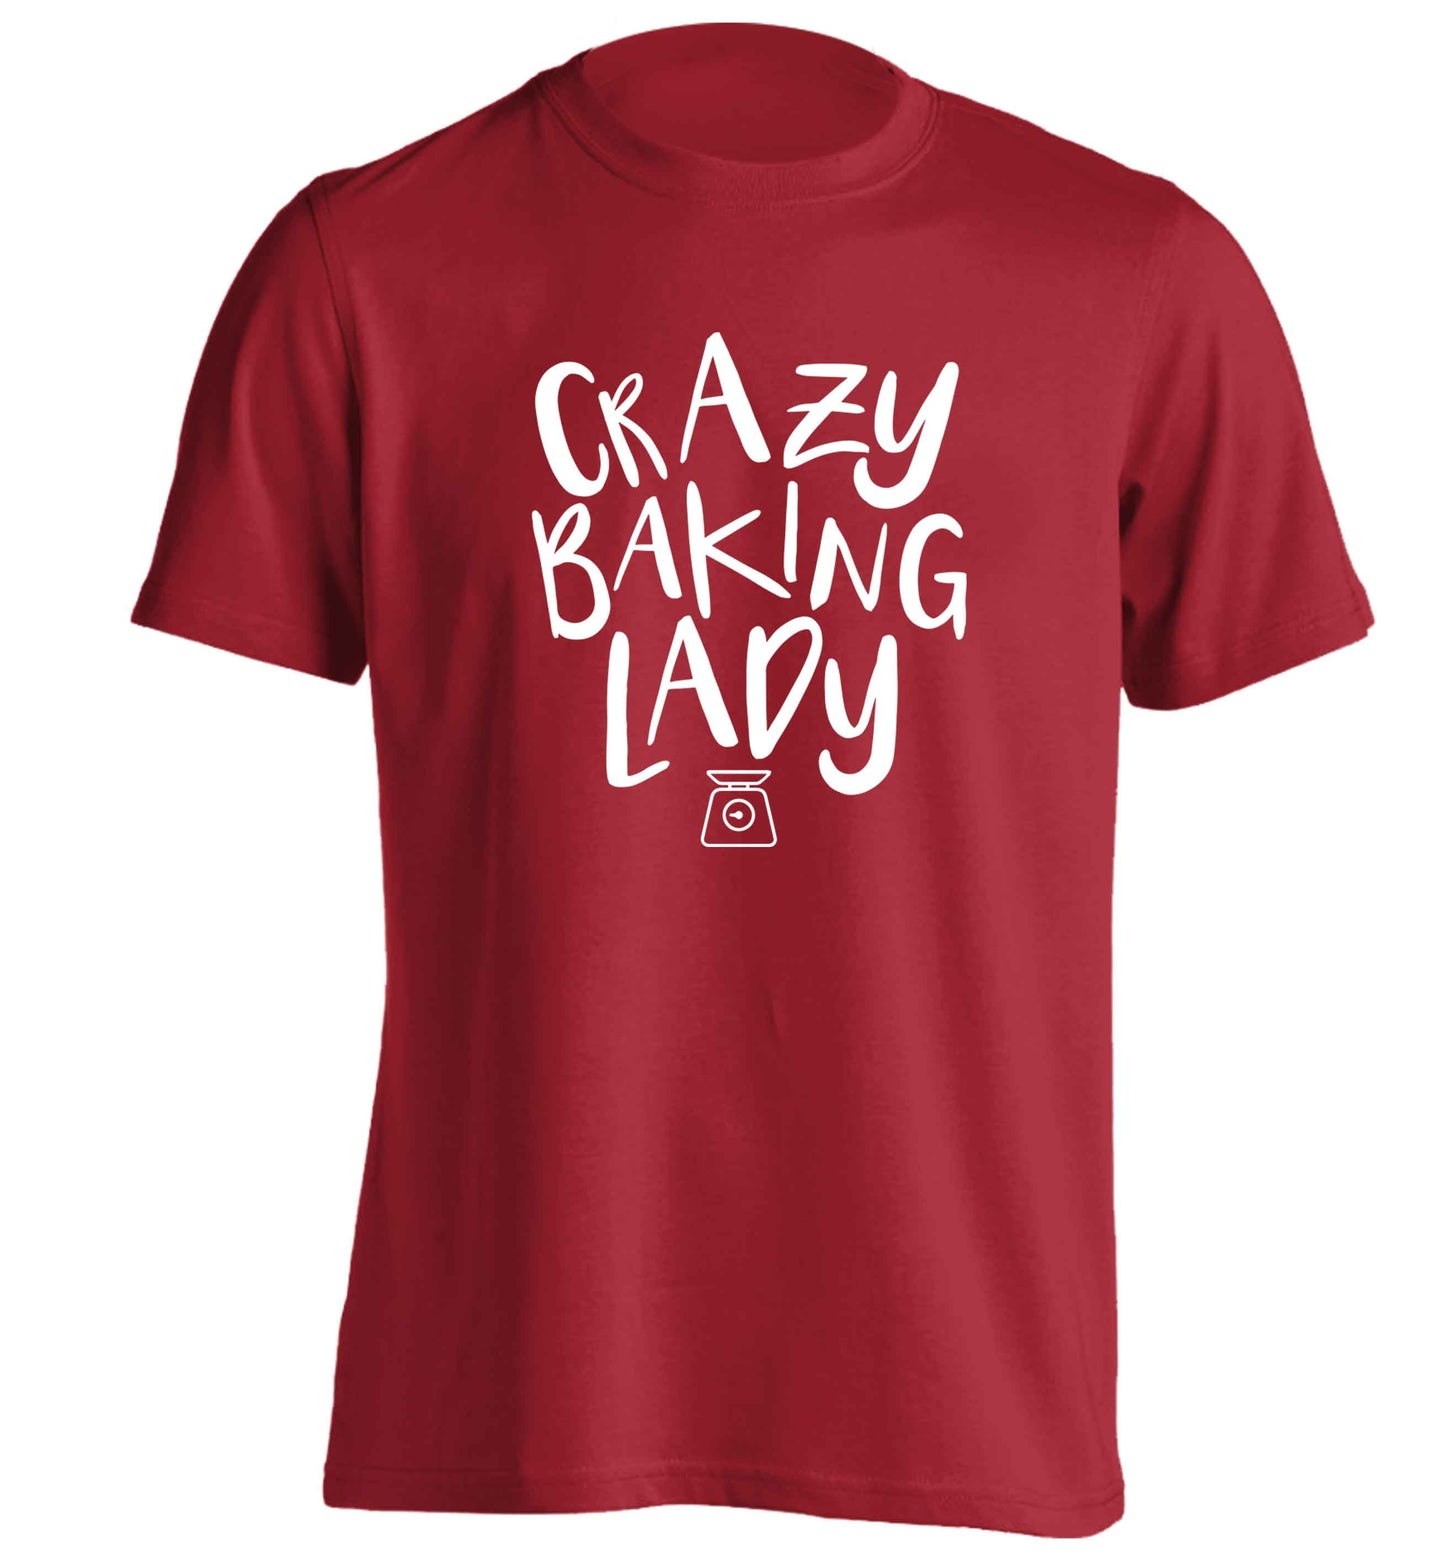 Crazy baking lady adults unisex red Tshirt 2XL